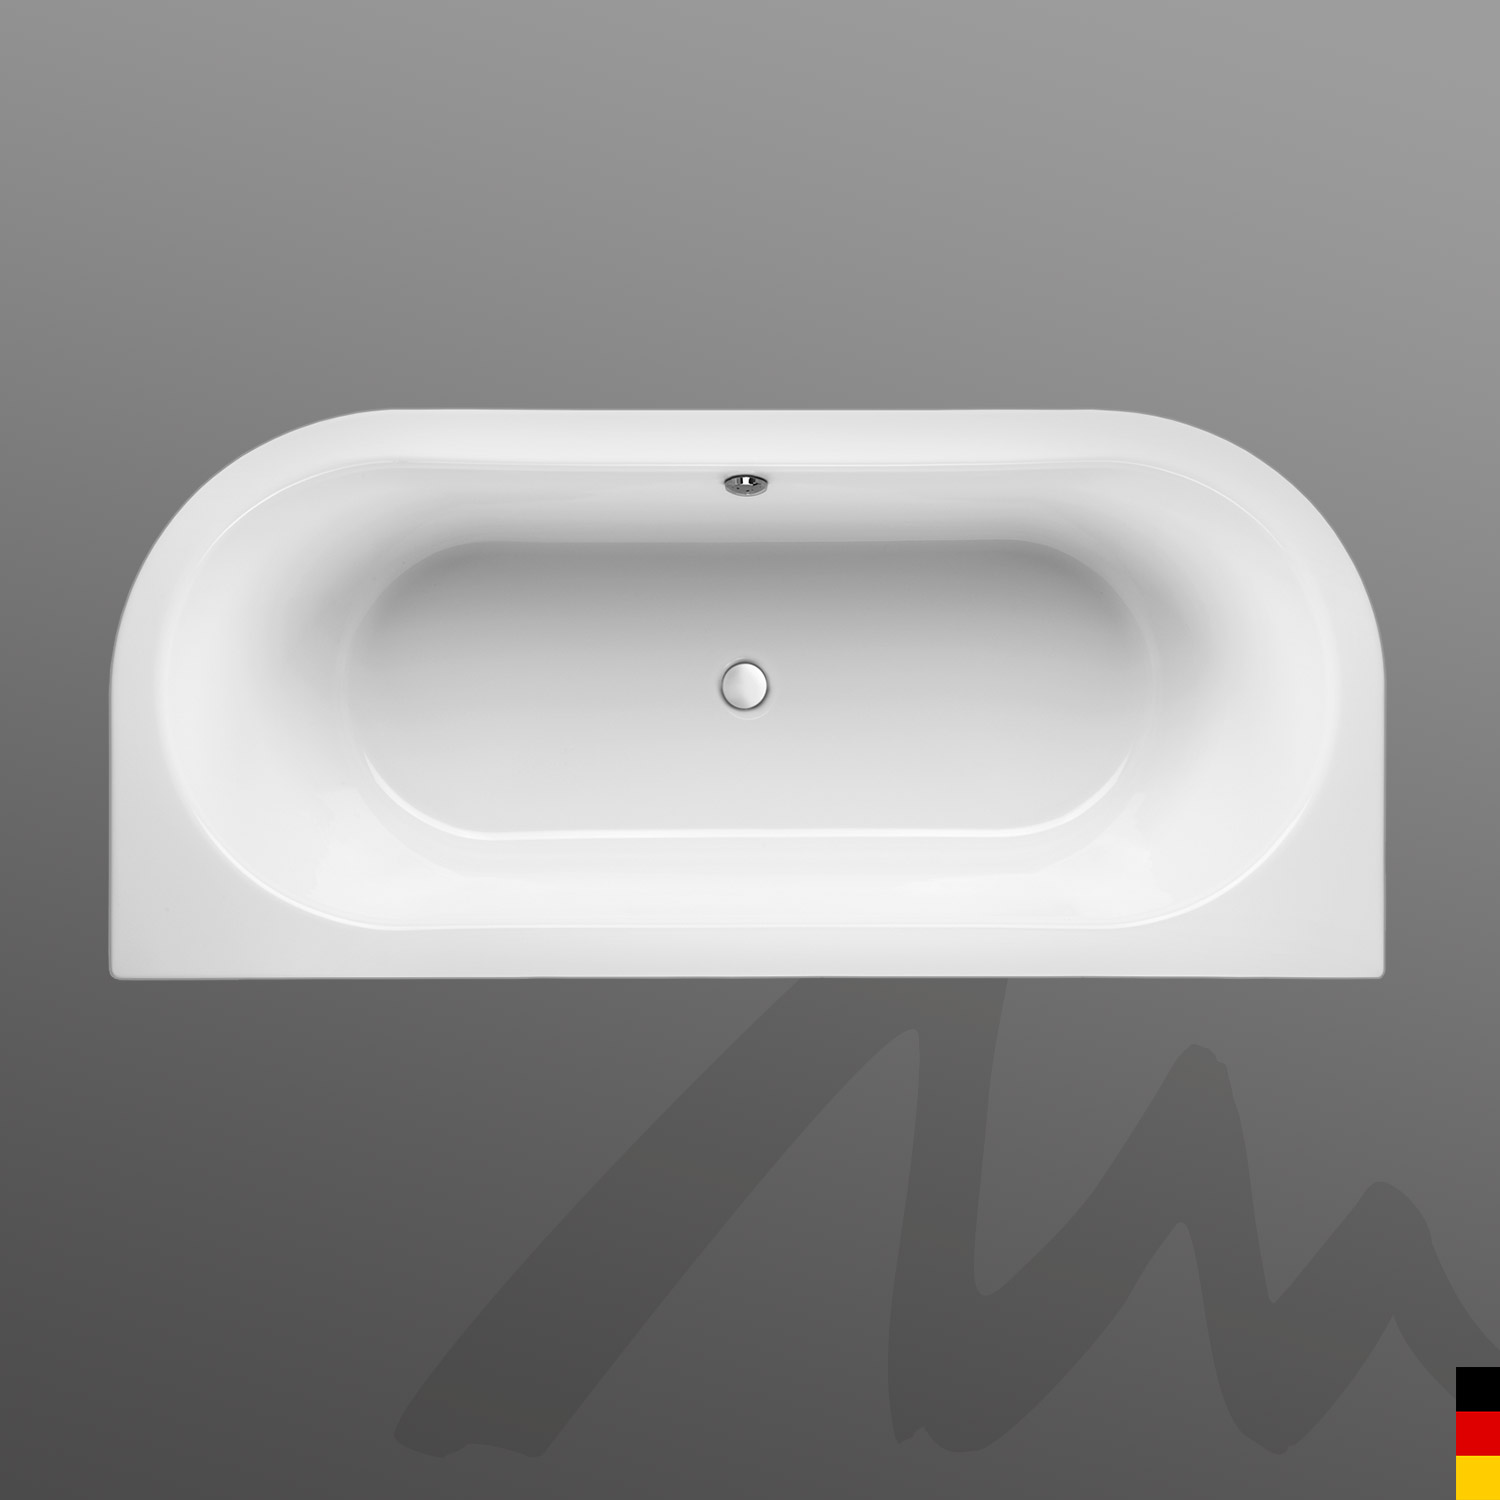 Mauersberger Badewanne Oval Primo 2 - 180/80 duo  180x80x45  Farbe:rein-weiß